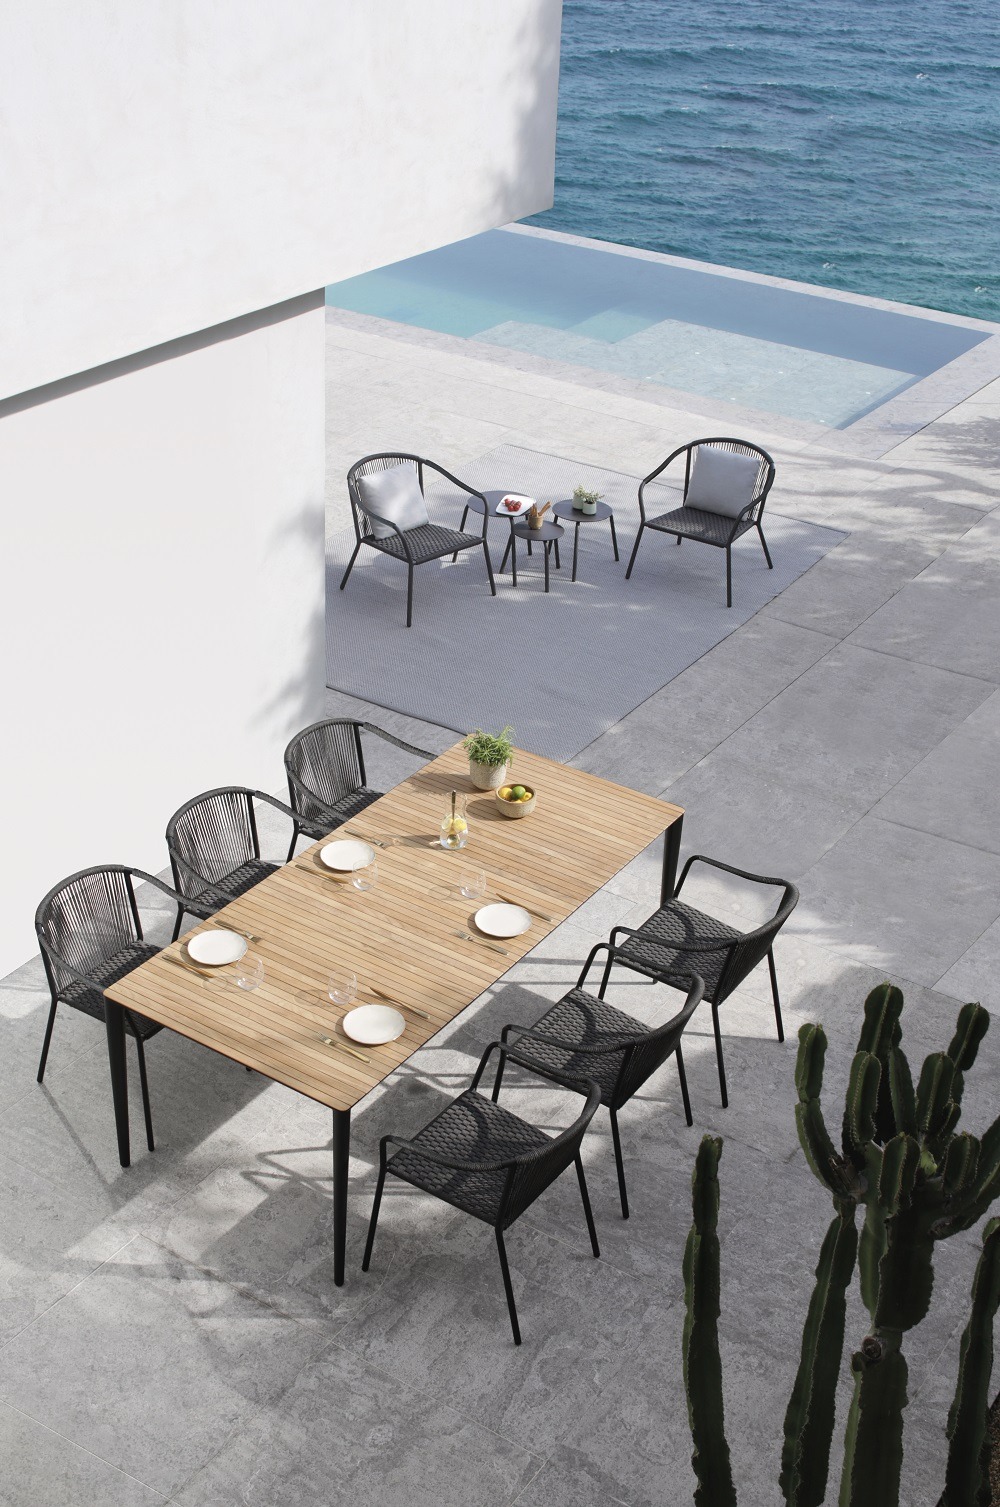 u-nite-220-table-samba-55-dining-chairs-samba-77-low-chairs-samba-t3-side-tables-rug-2535.jpg